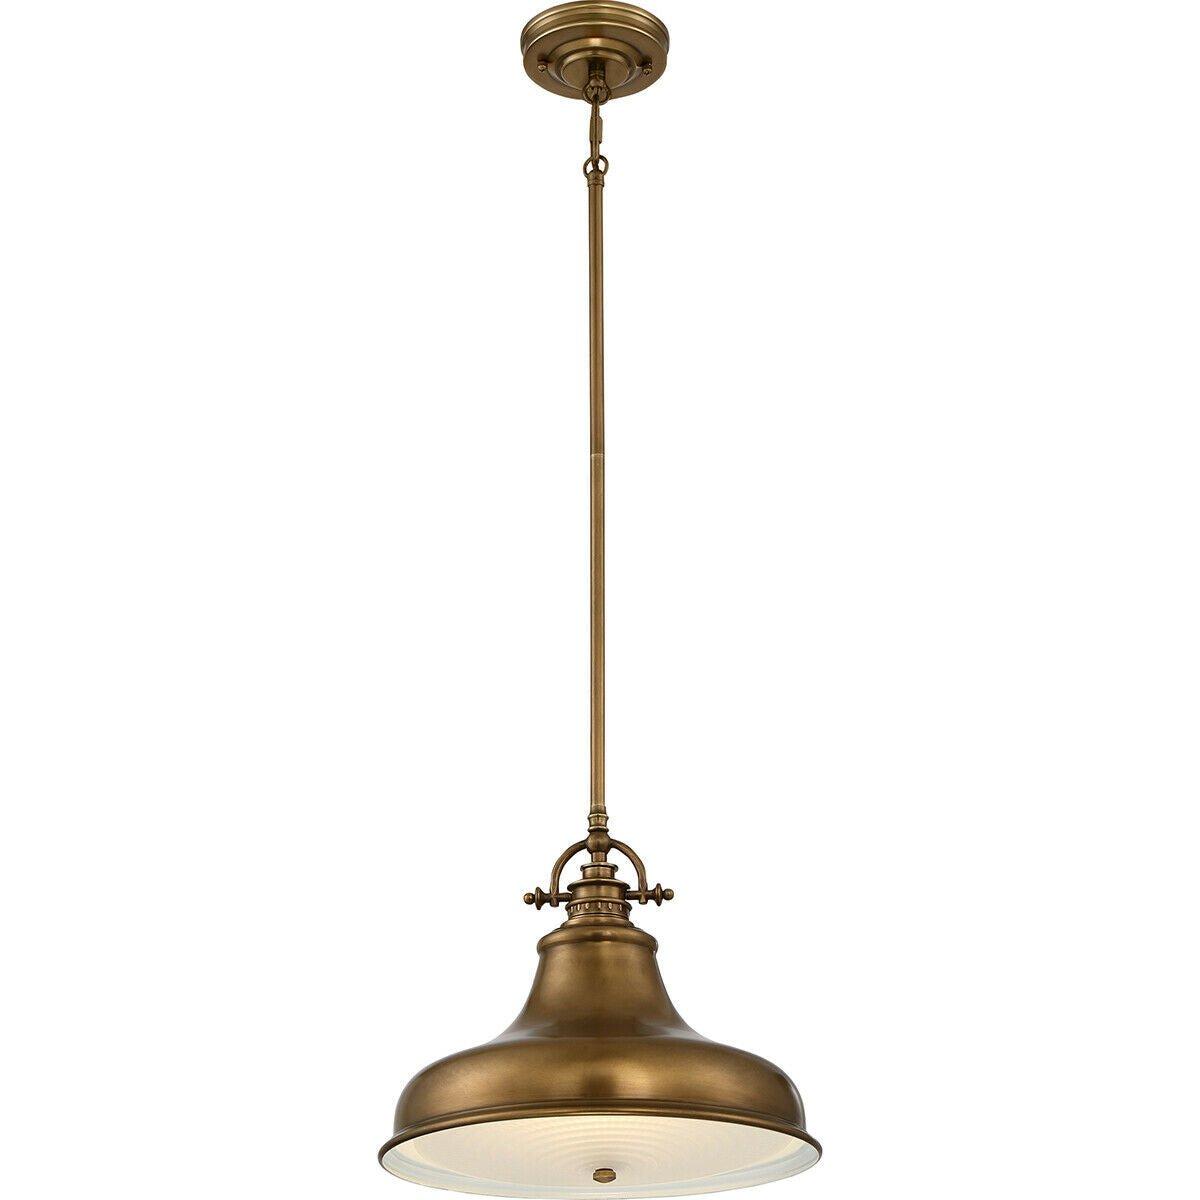 1 Bulb Ceiling Pendant Light Fitting Weathered Brass LED E27 100W Bulb